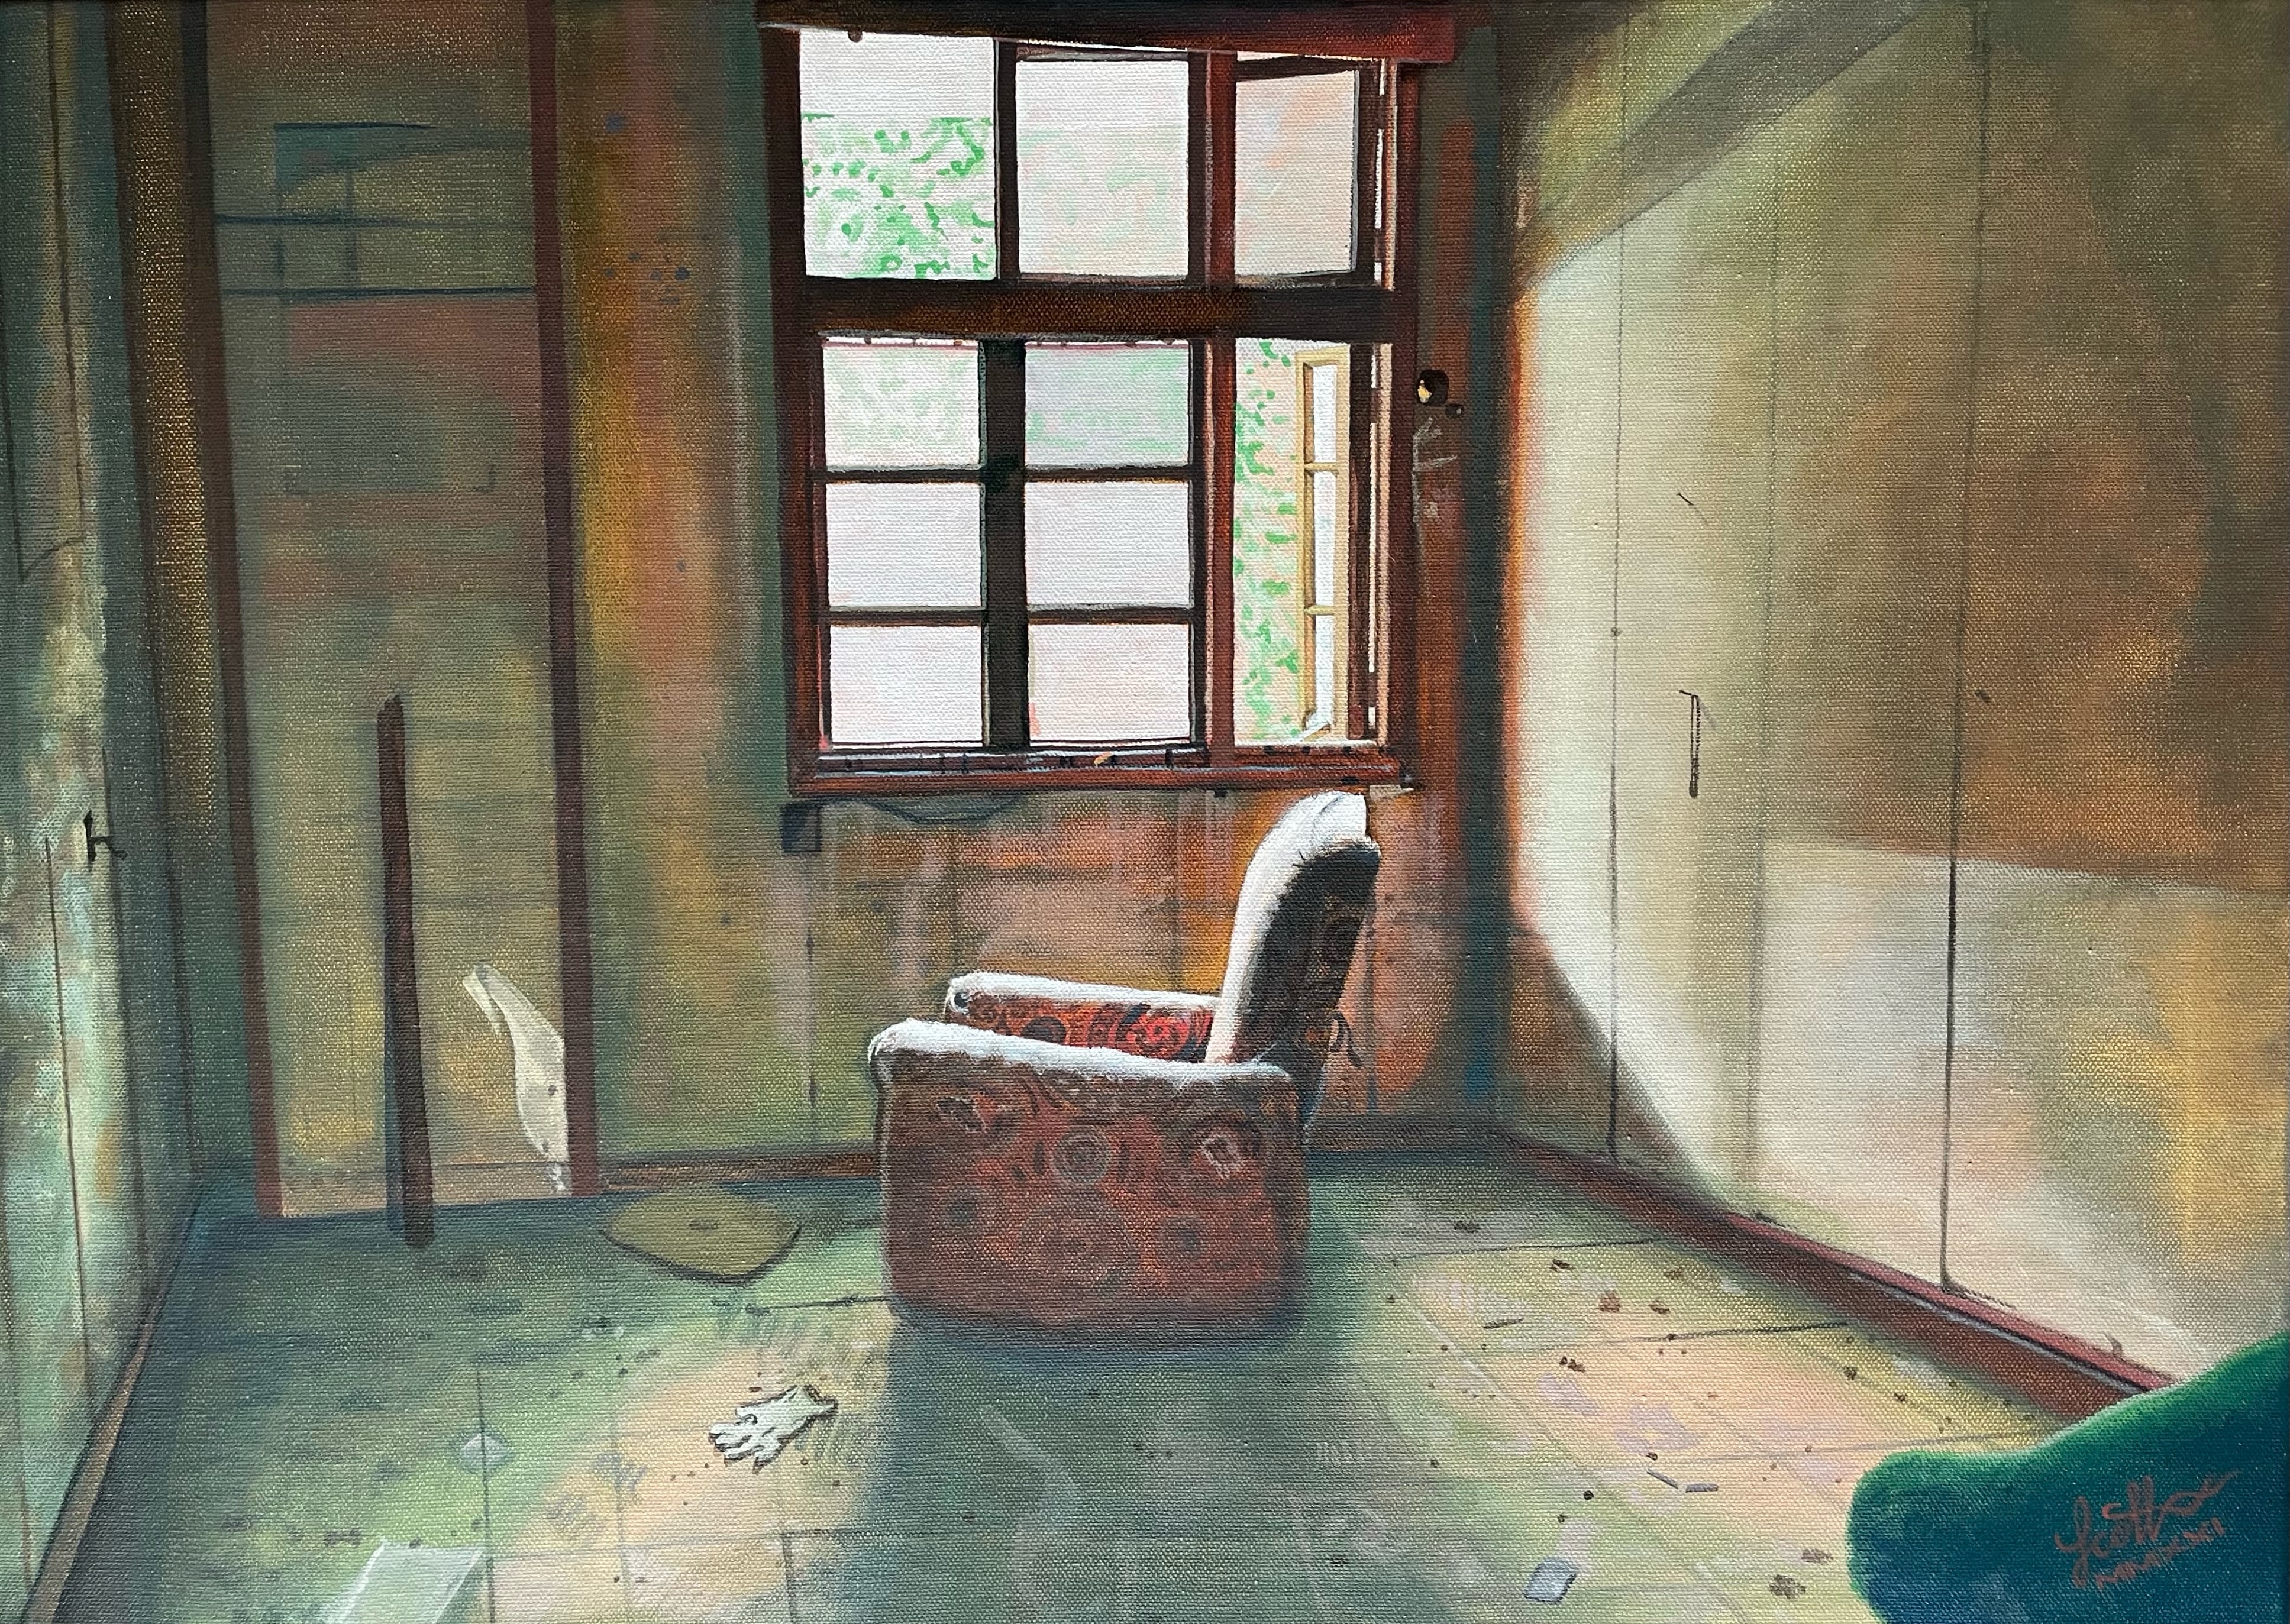 Christopher Scott - Le Chambre sans Wi-Fi köpa konst oljemålning.